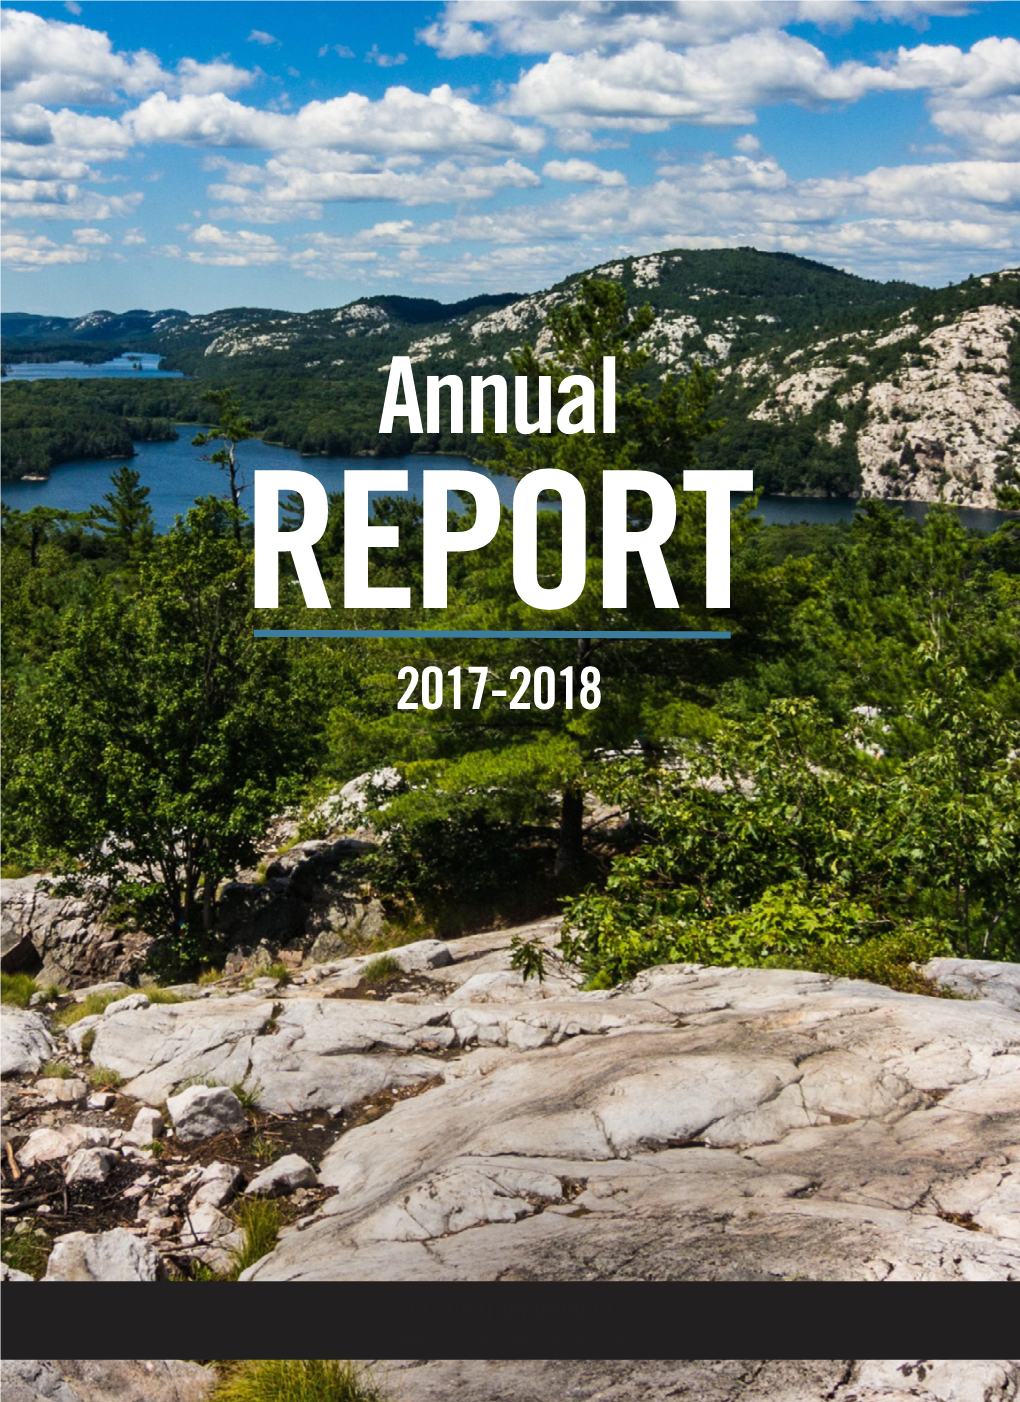 Annual REPORT 2017-2018